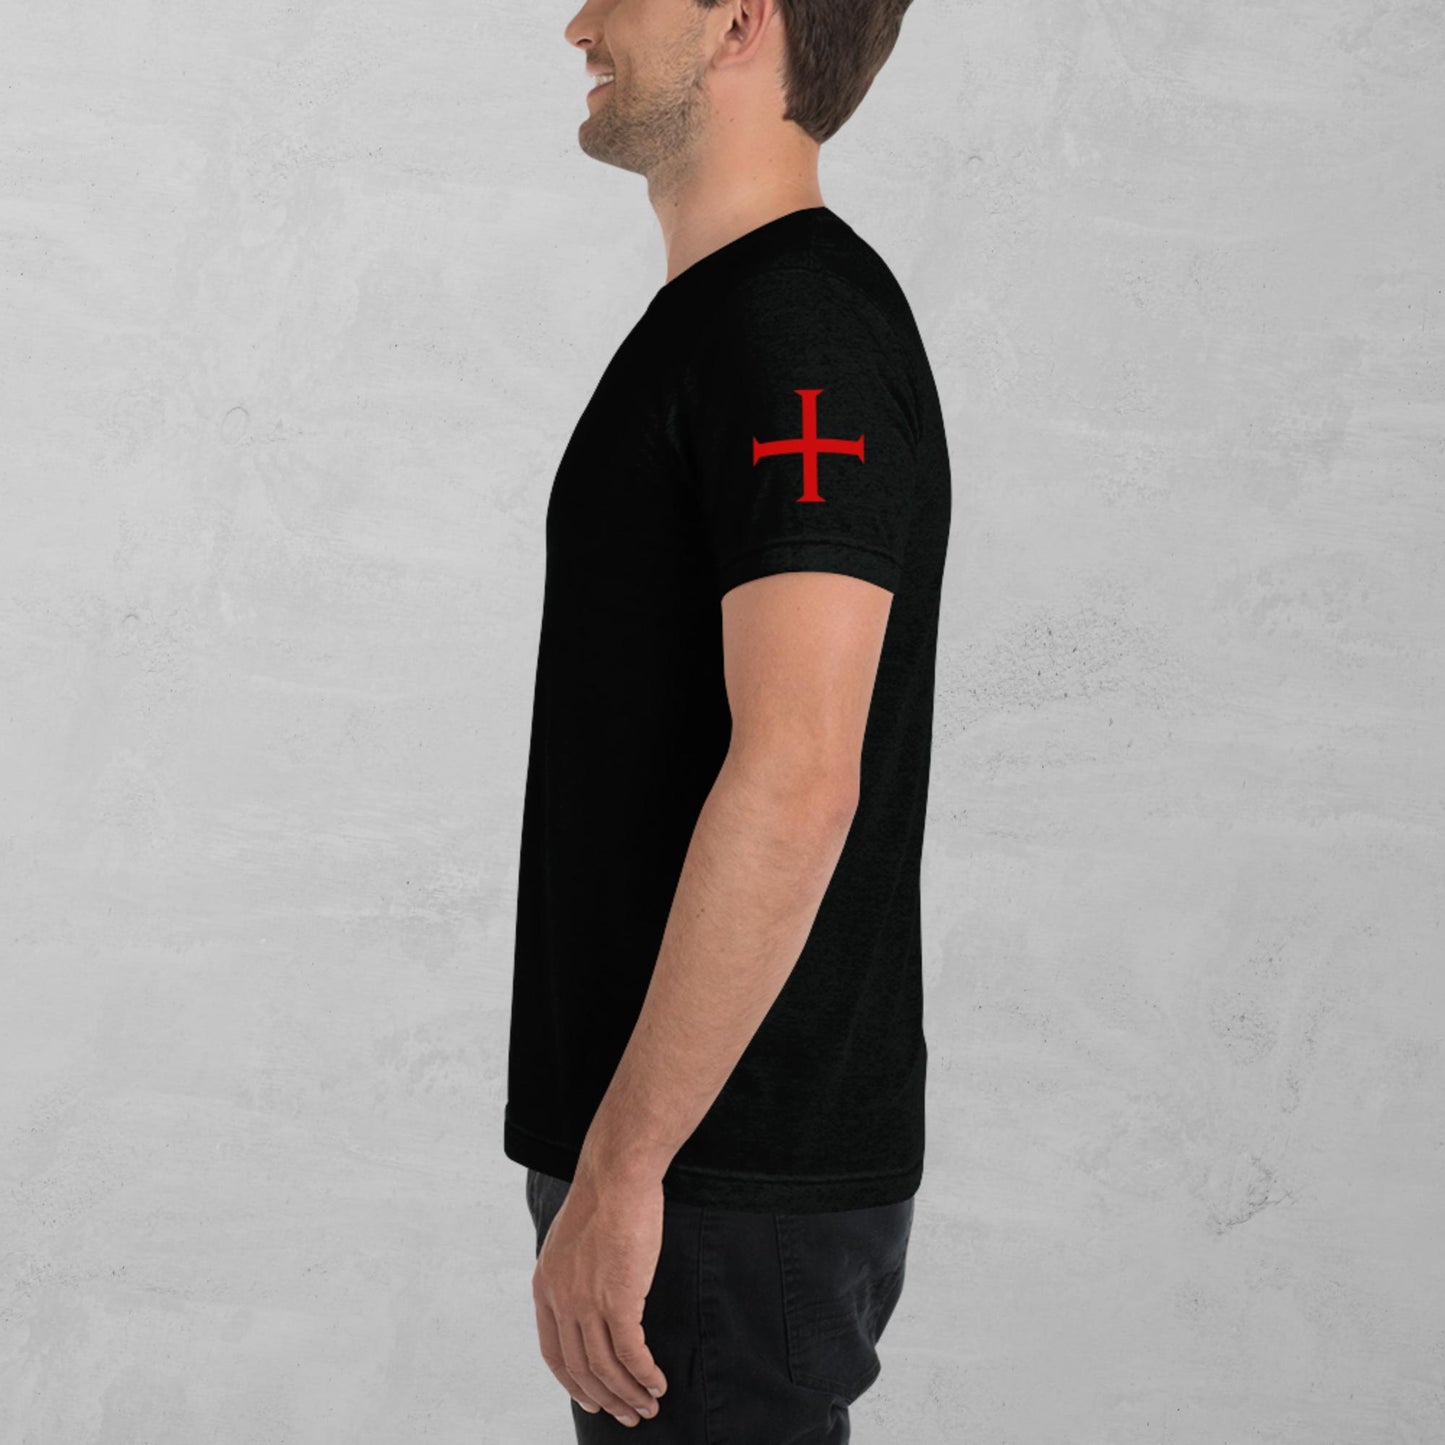 Crusader Cross t-shirt